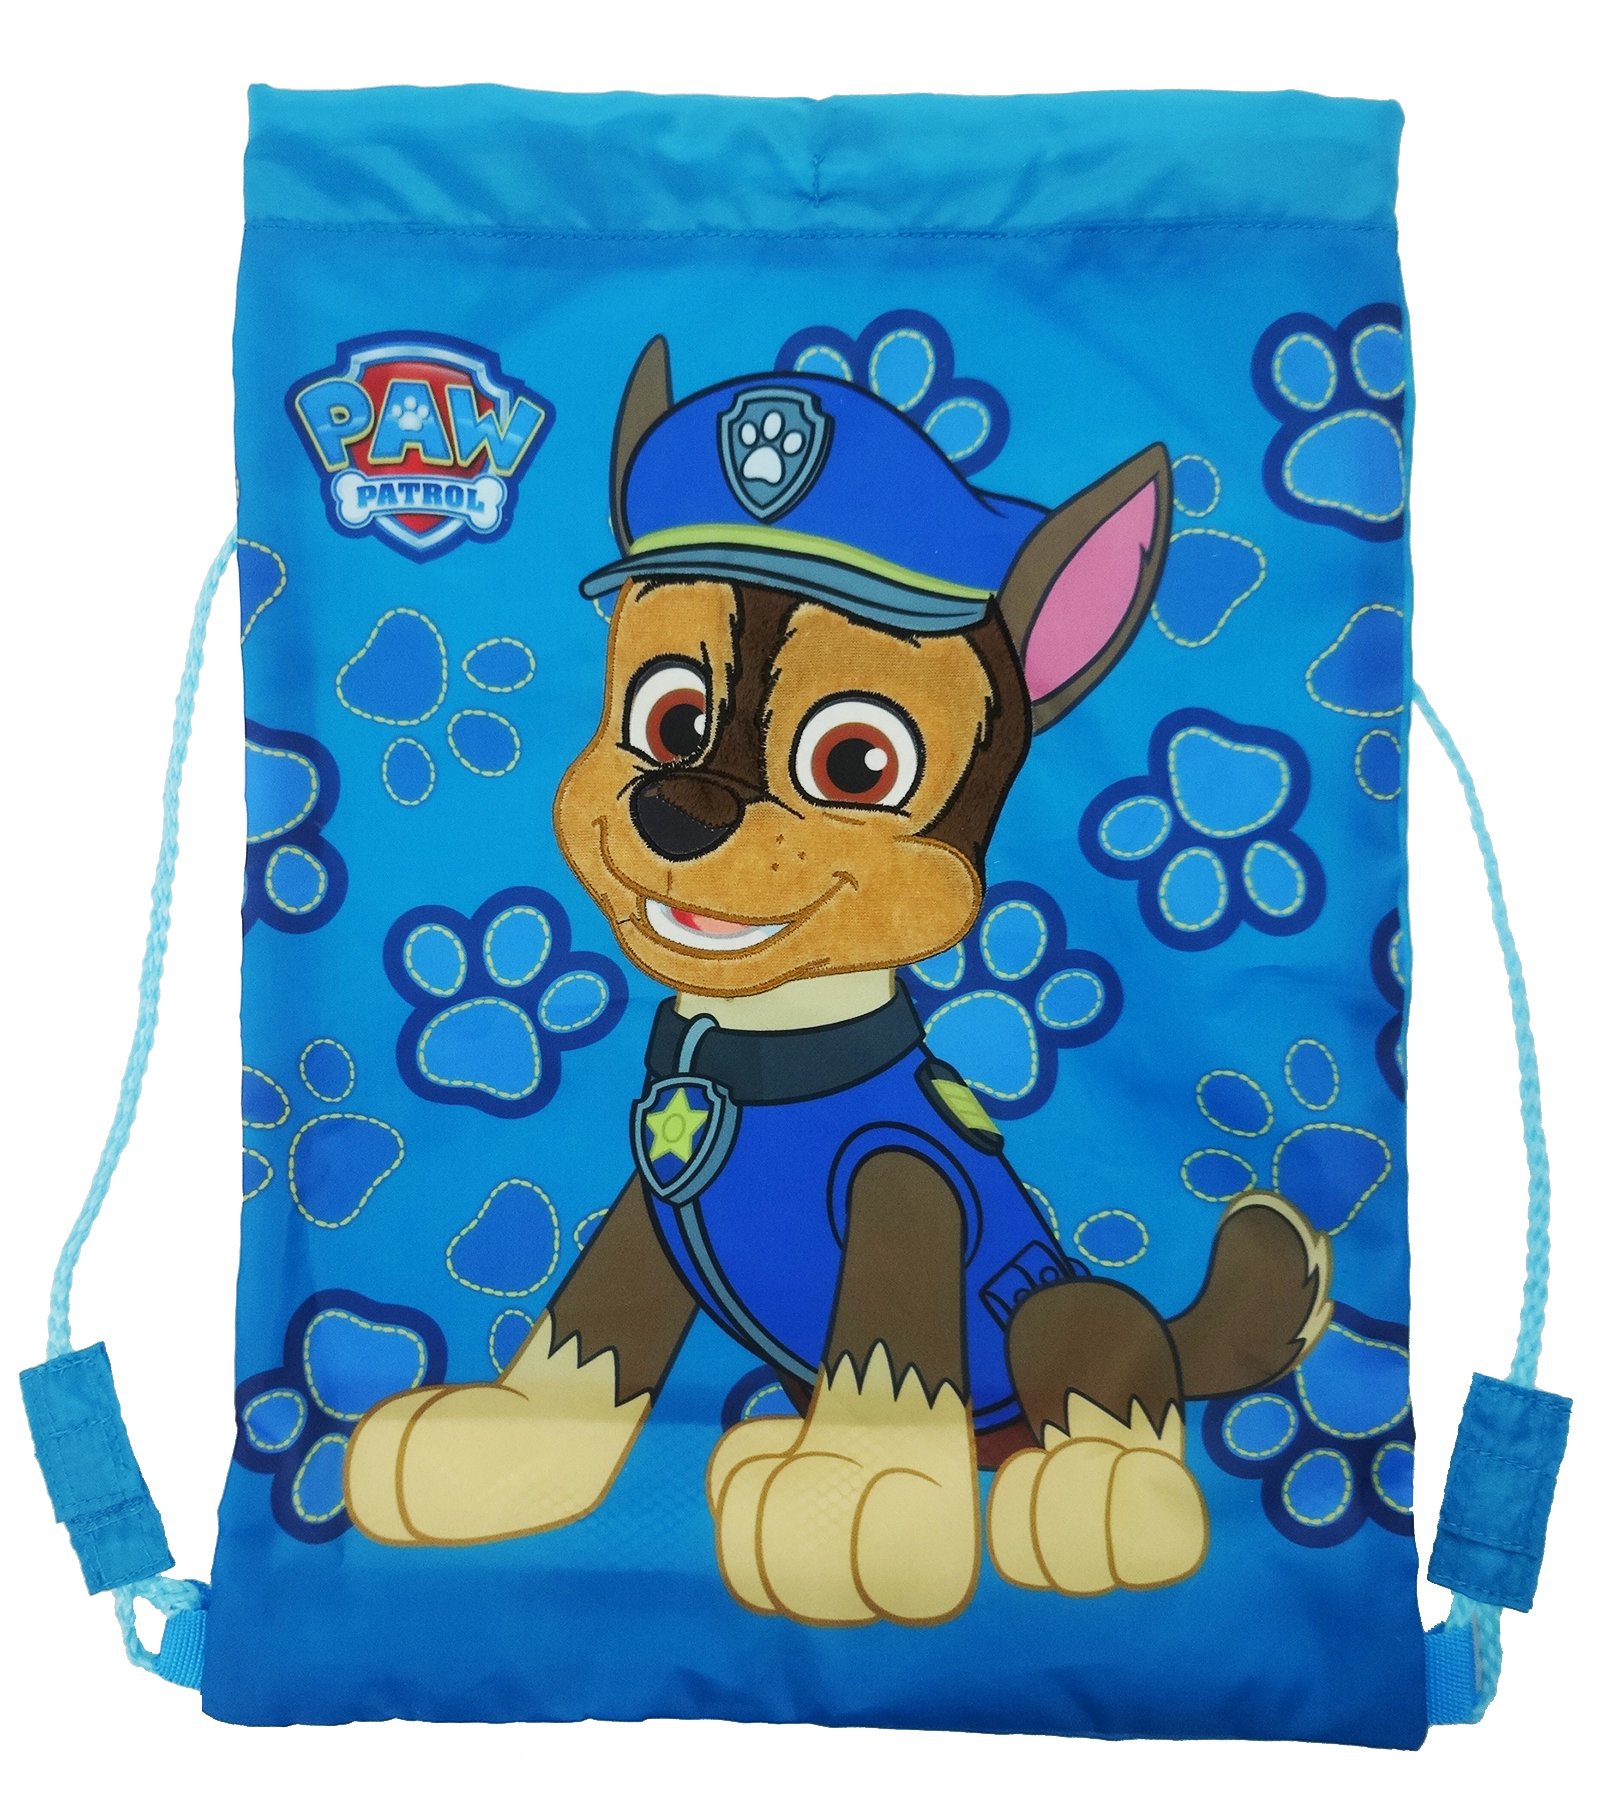 Paw Patrol 'Chase' School Trainer Bag